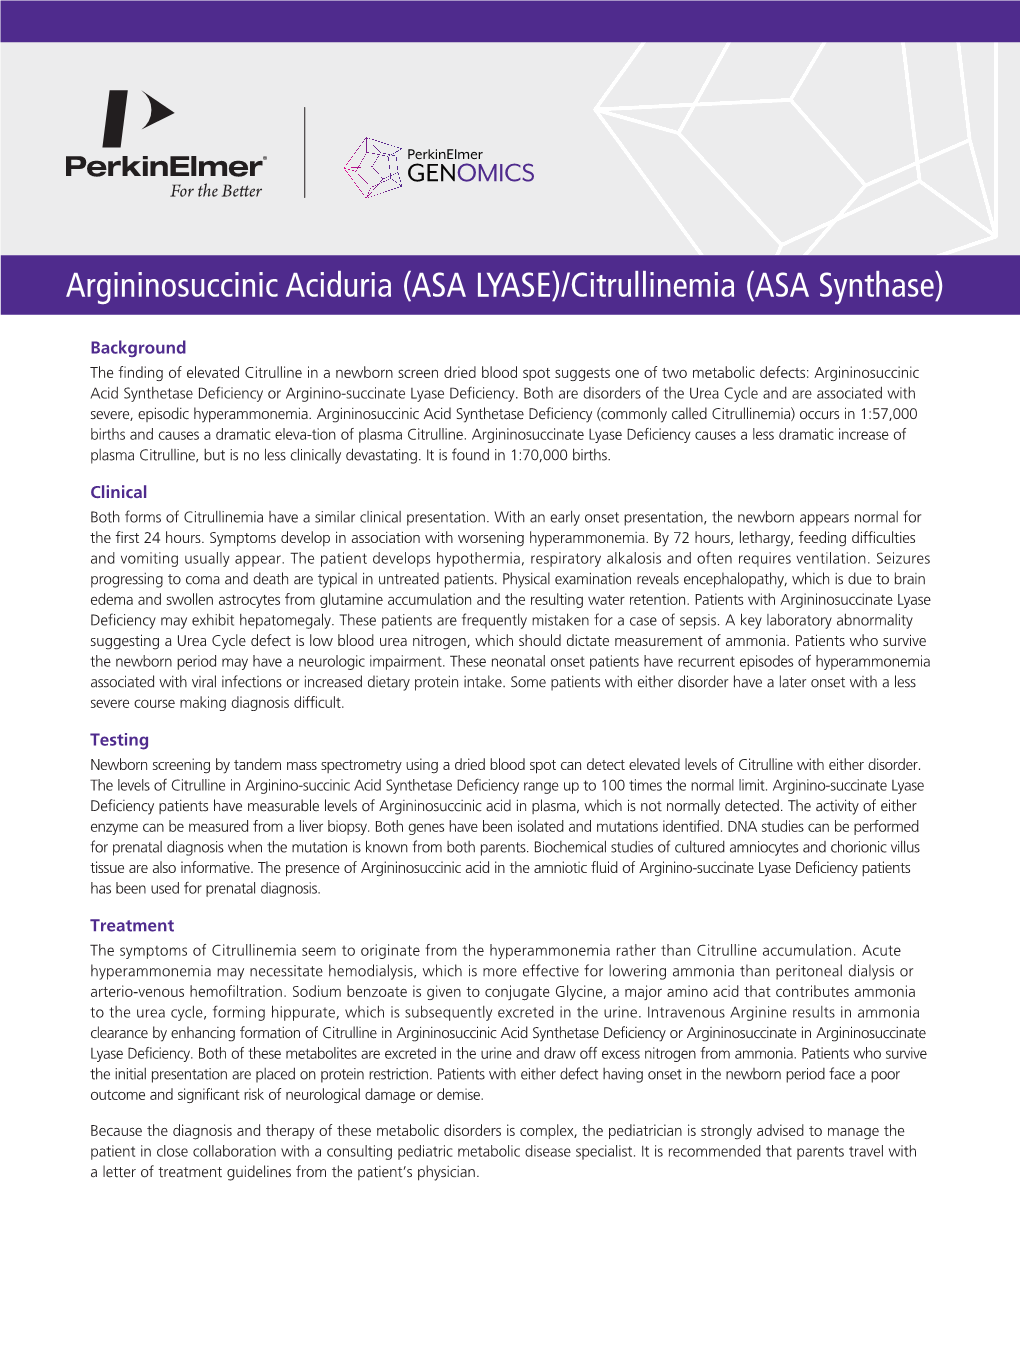 Argininosuccinic Aciduria (ASA LYASE)/Citrullinemia (ASA Synthase)